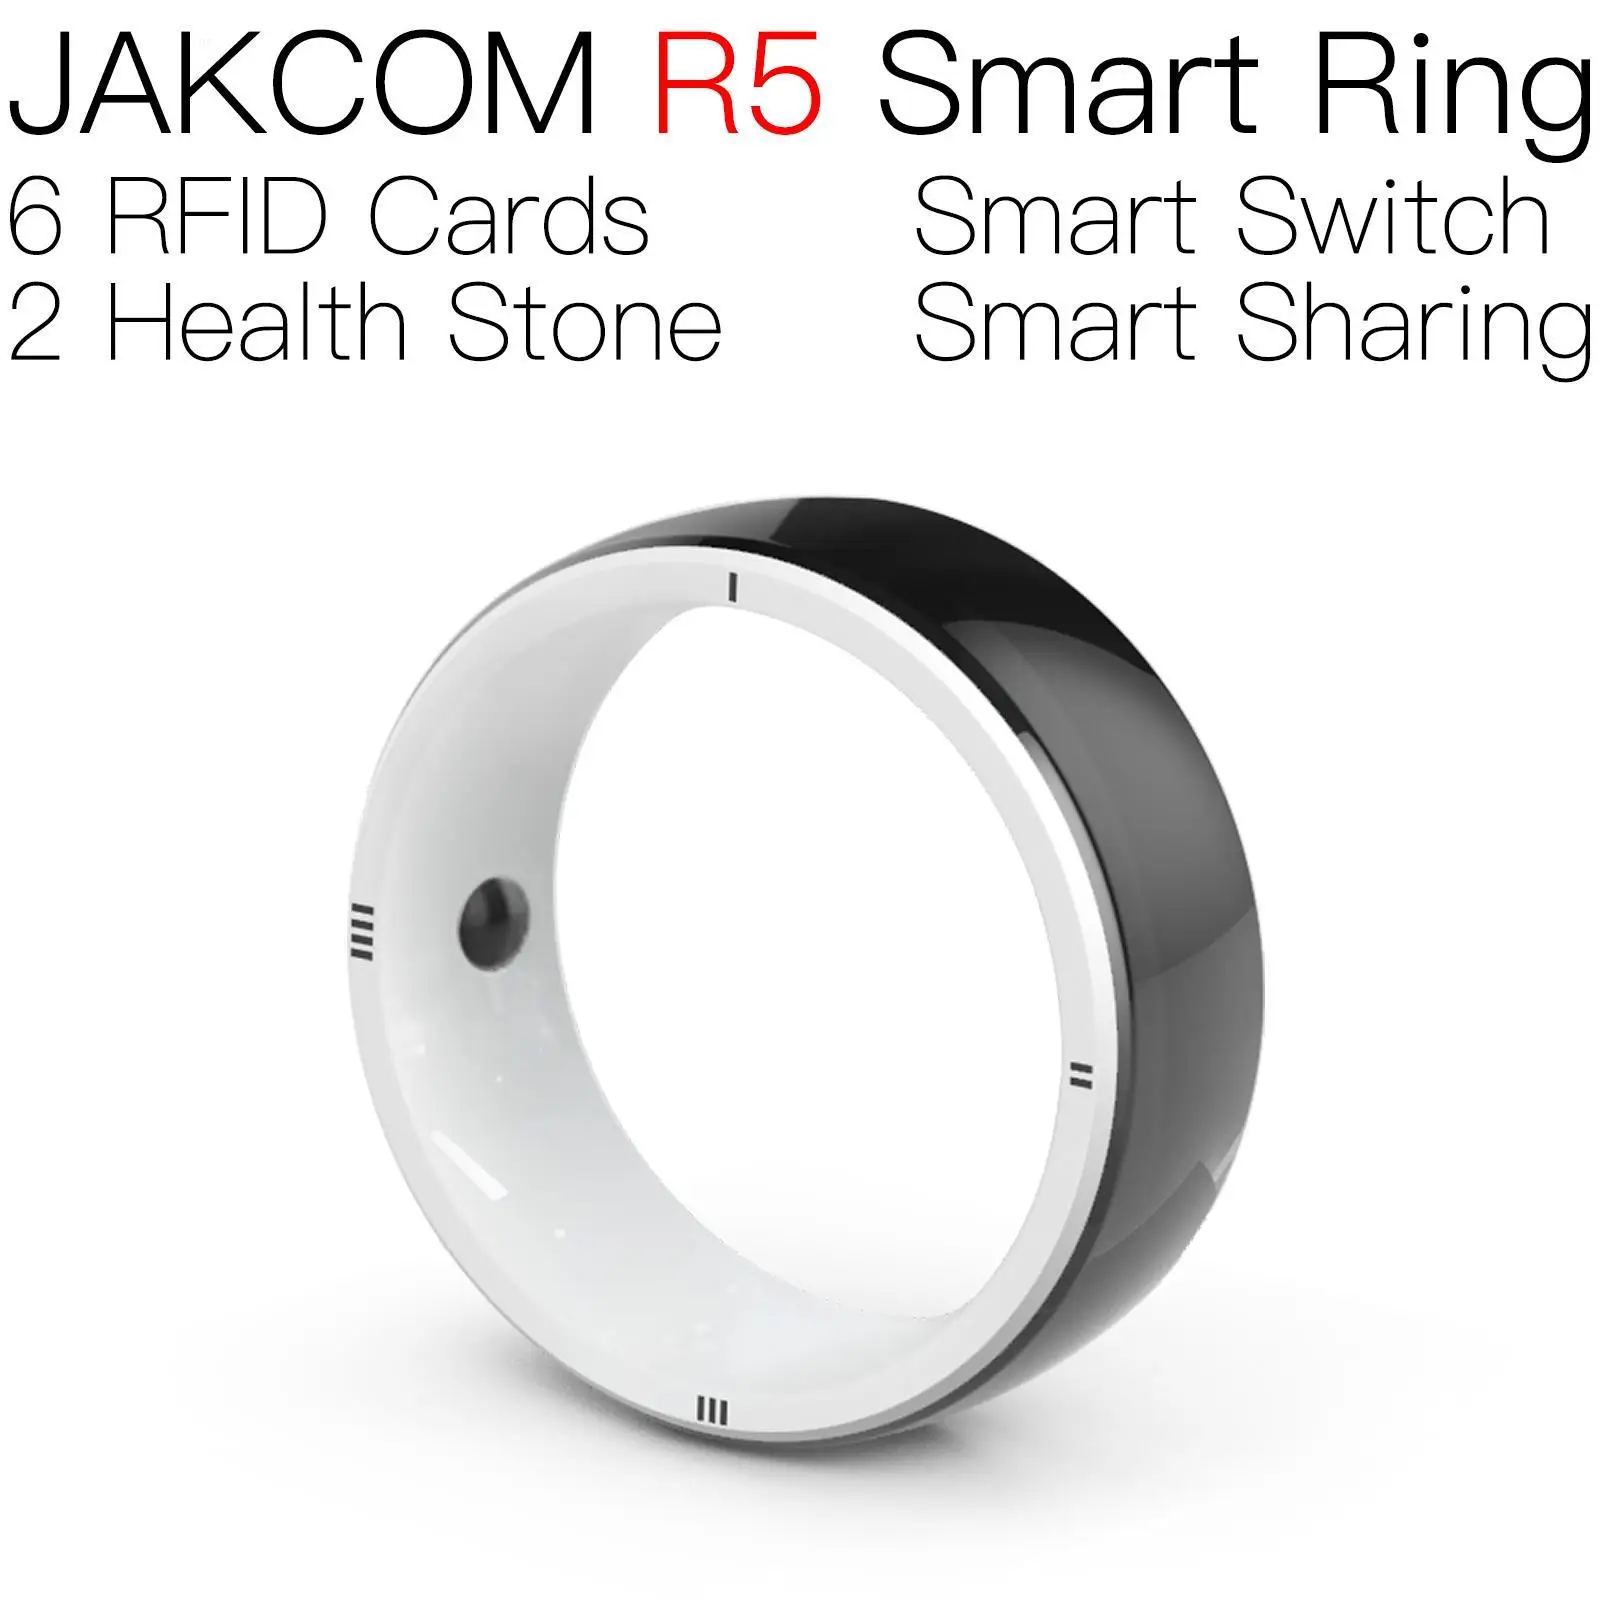 

JAKCOM R5 Smart Ring Super value as implant rfid electronic nail proximity m30 code france juegos copier